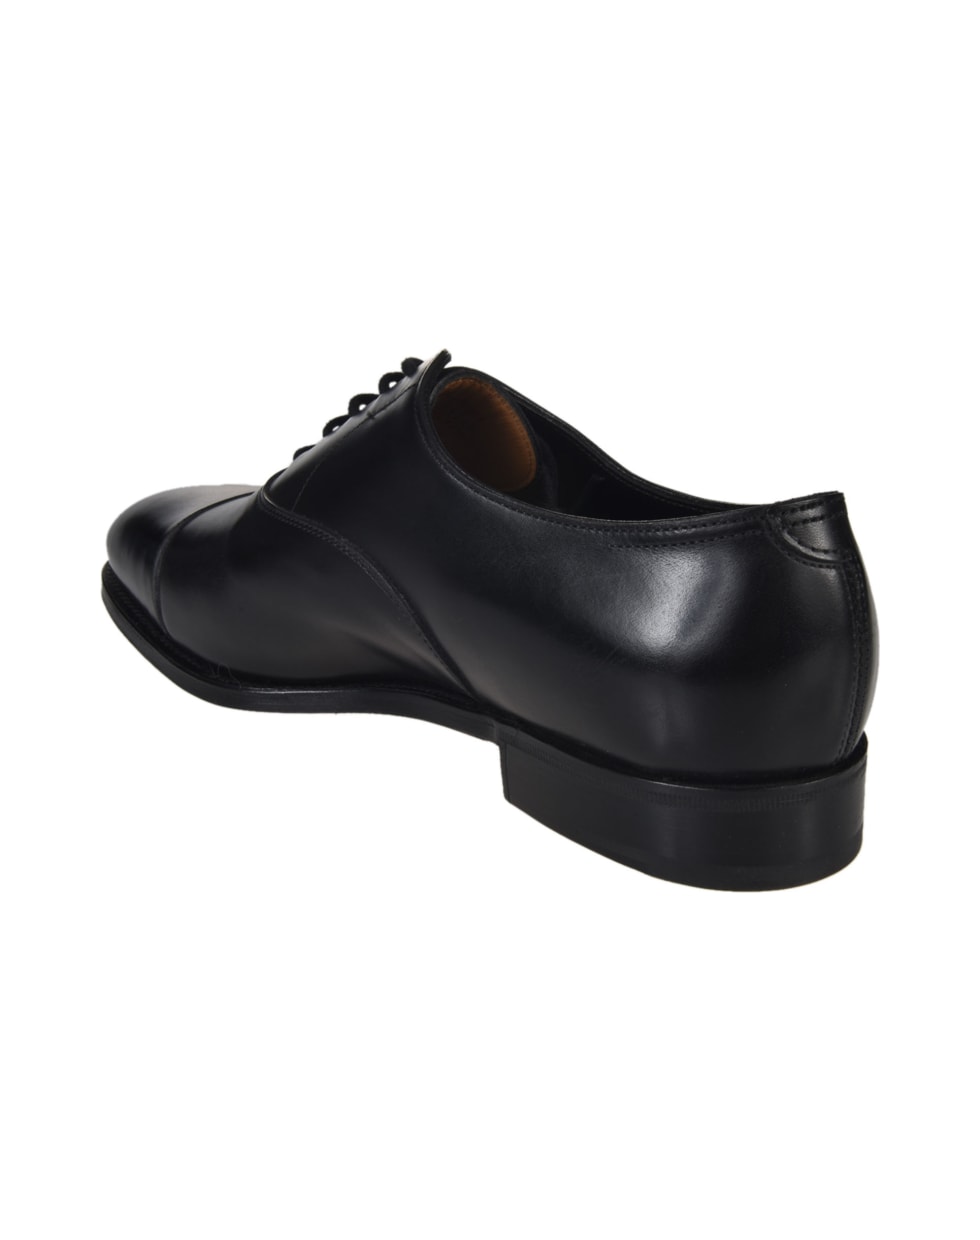 John Lobb City II Oxford Shoes - Black